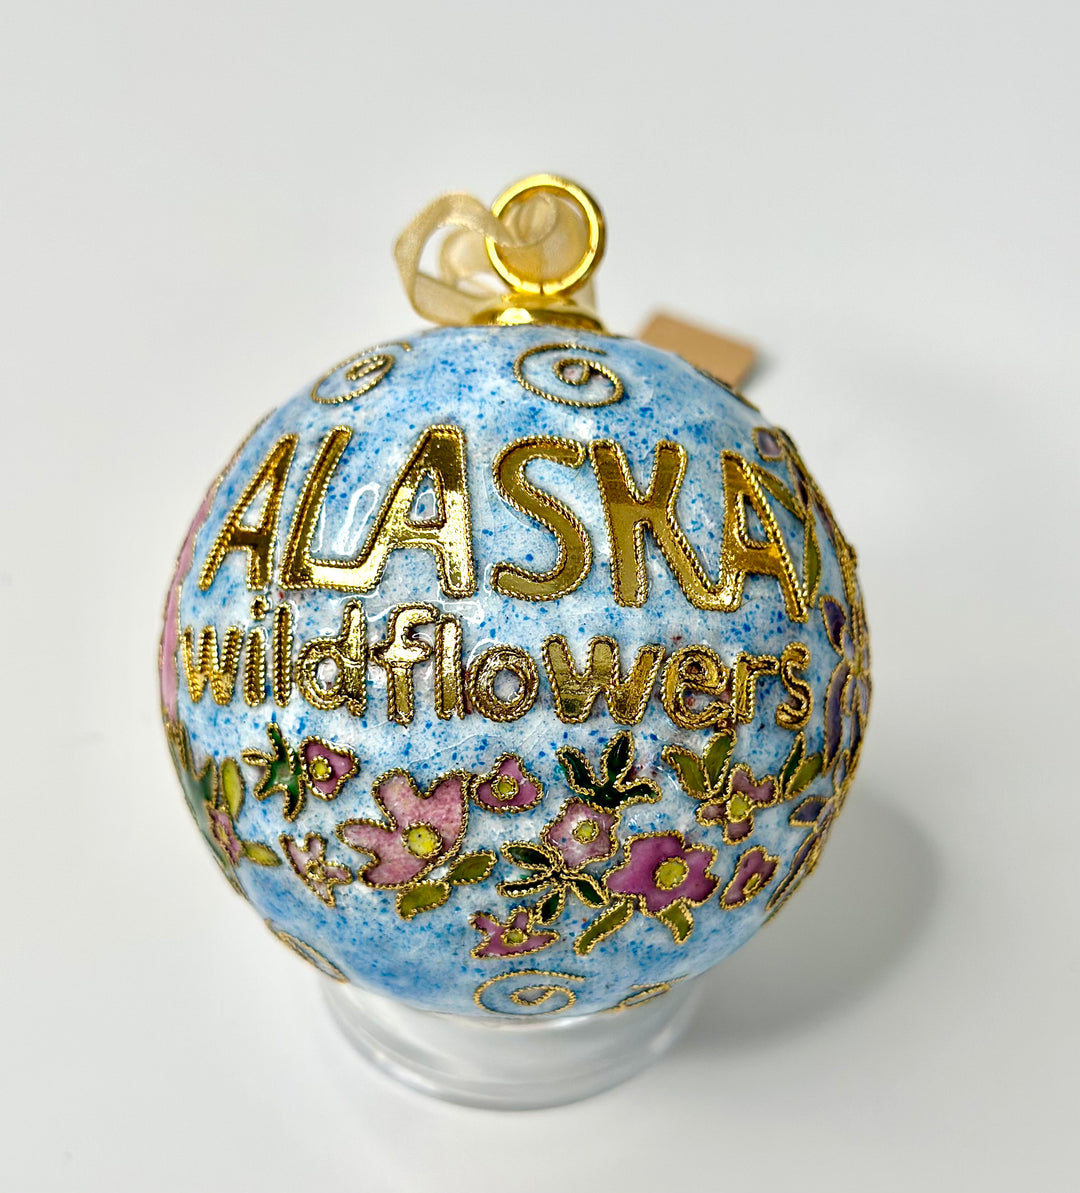 Wildflowers of Alaska Round Cloisonné Christmas Ornament - Blue